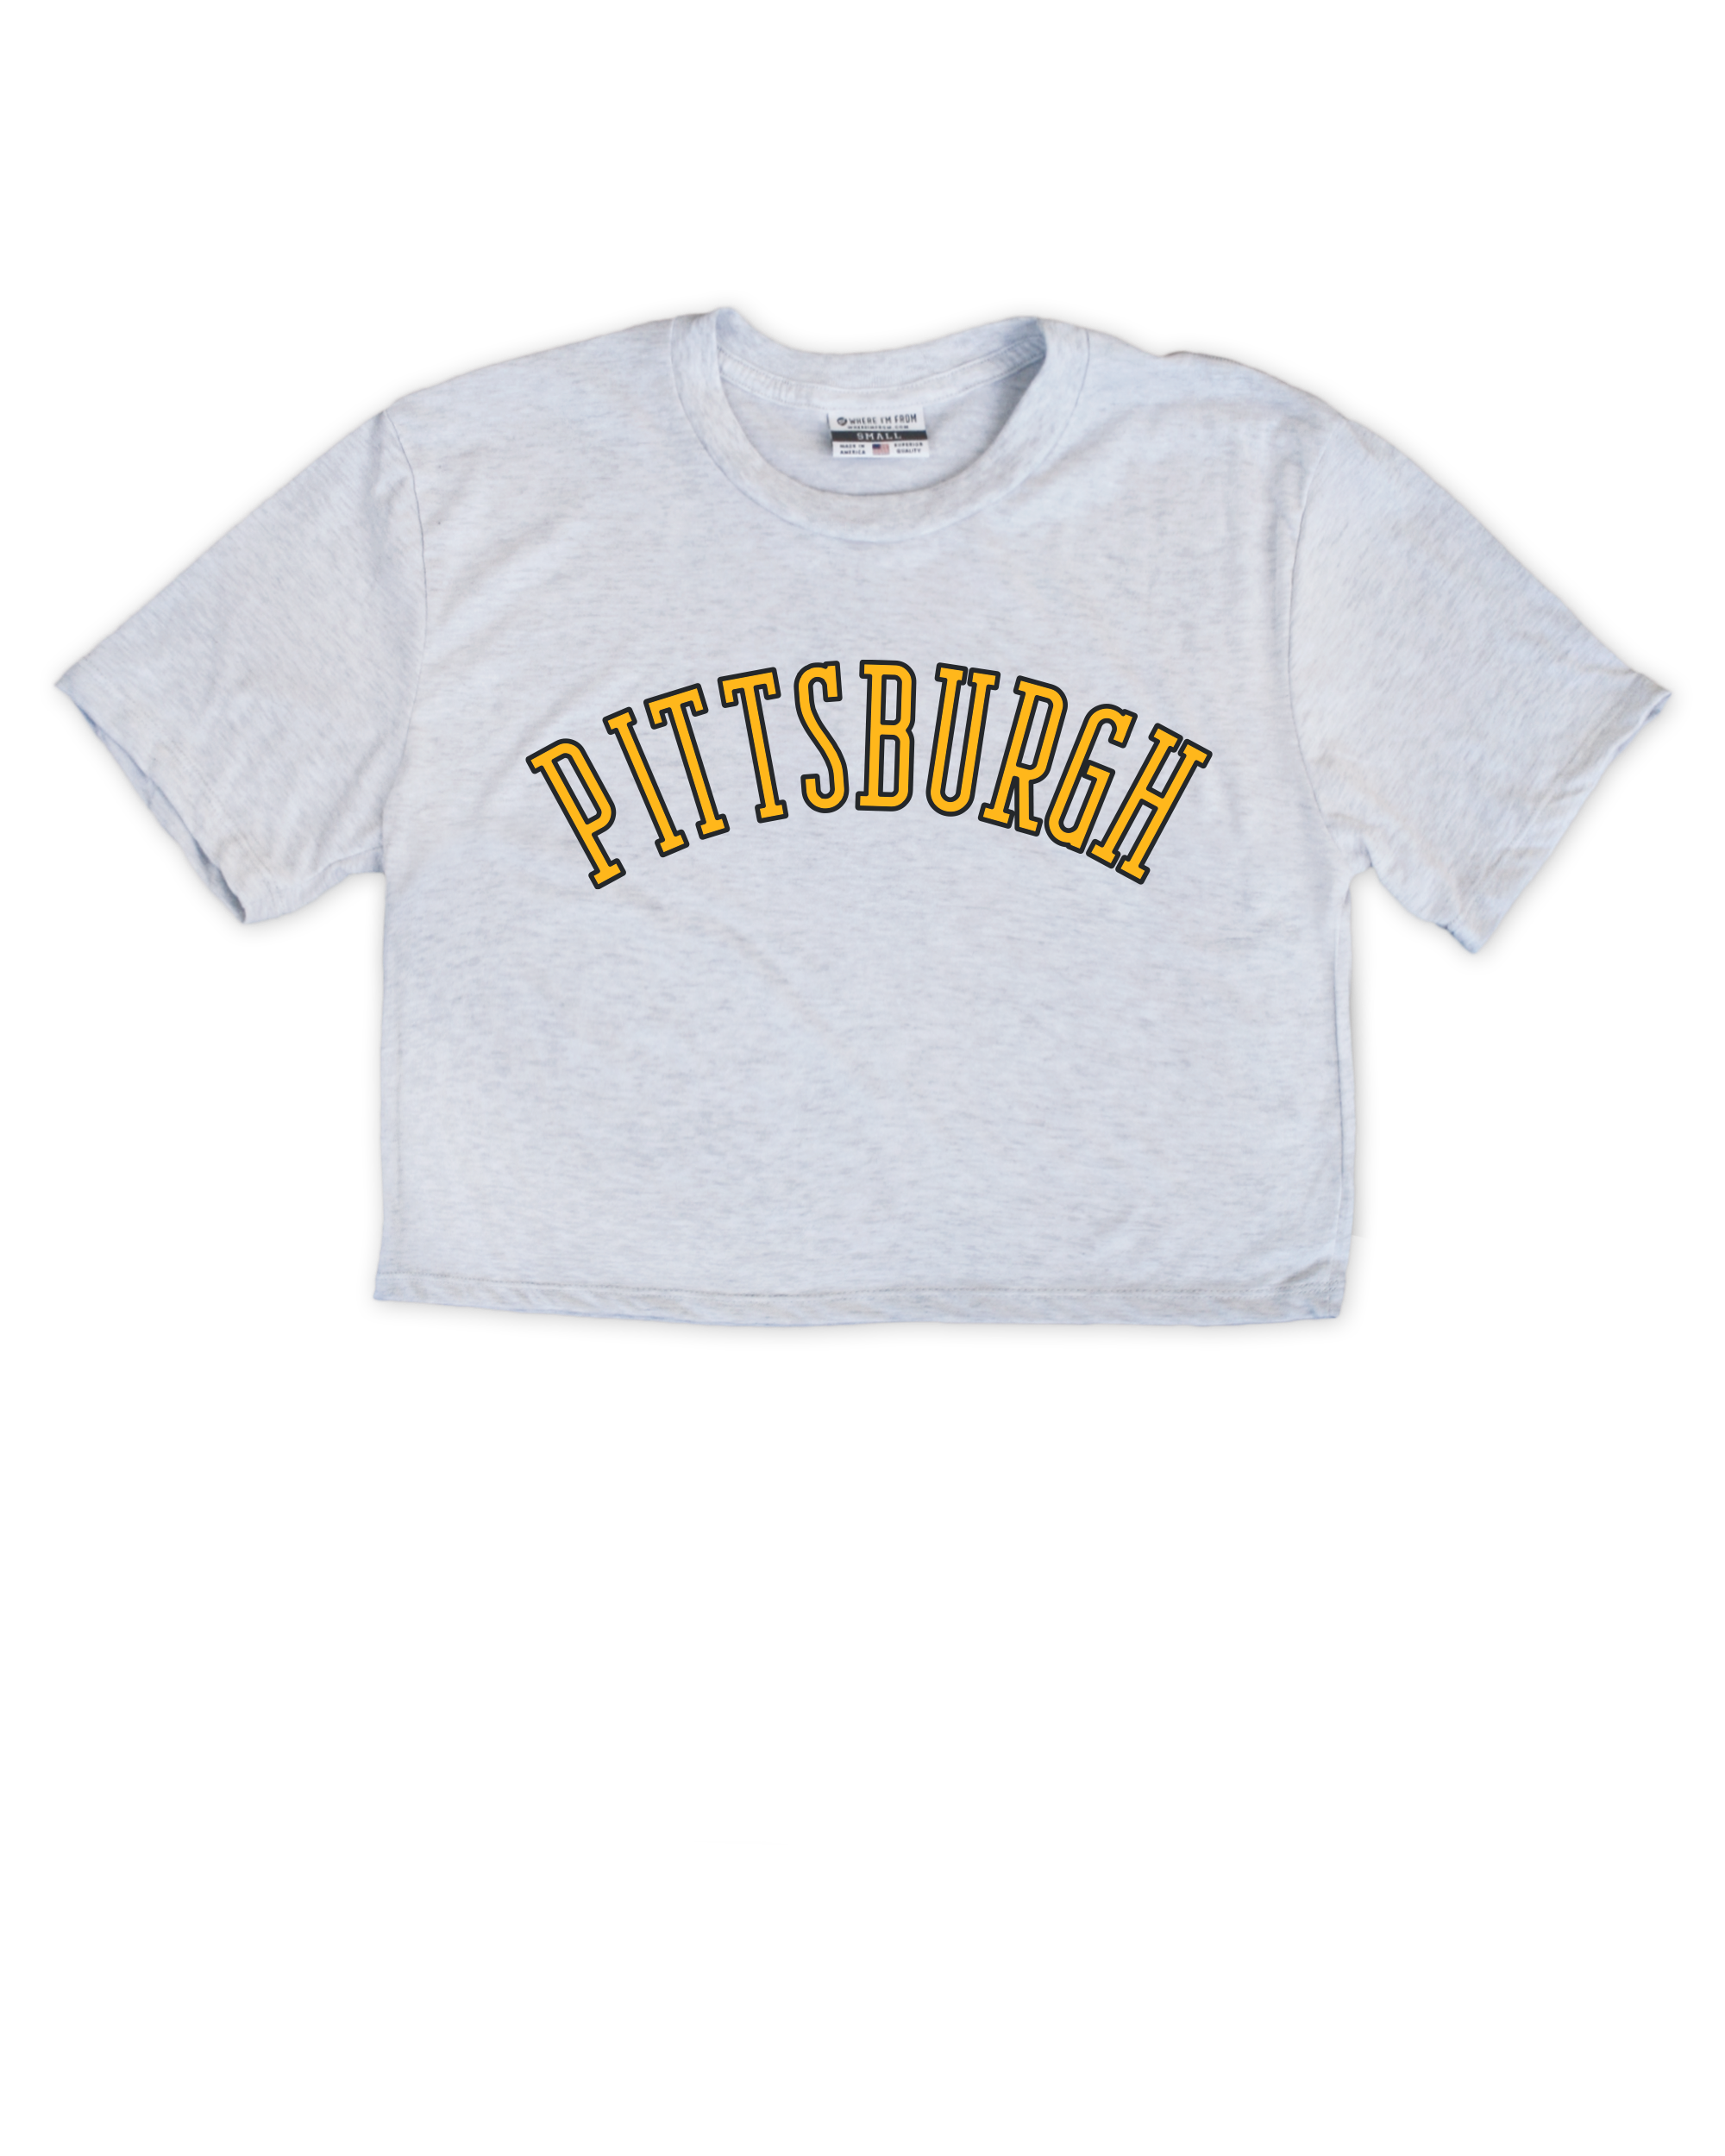 Pittsburgh we arrr family shirt - Teespix - Store Fashion LLC